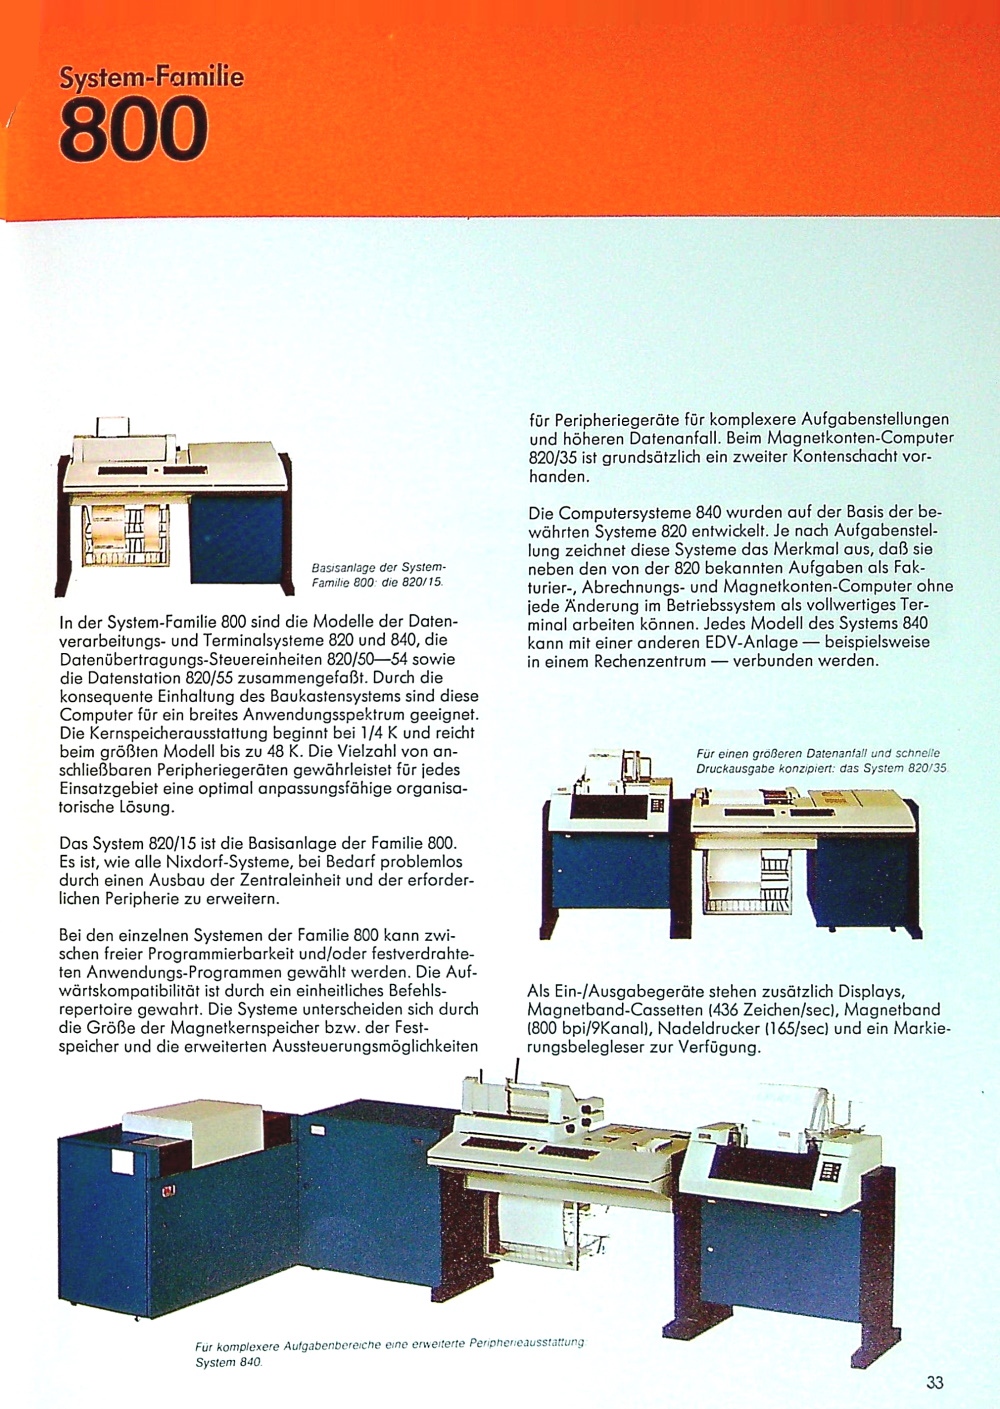 Nixdorf Produkte 1974